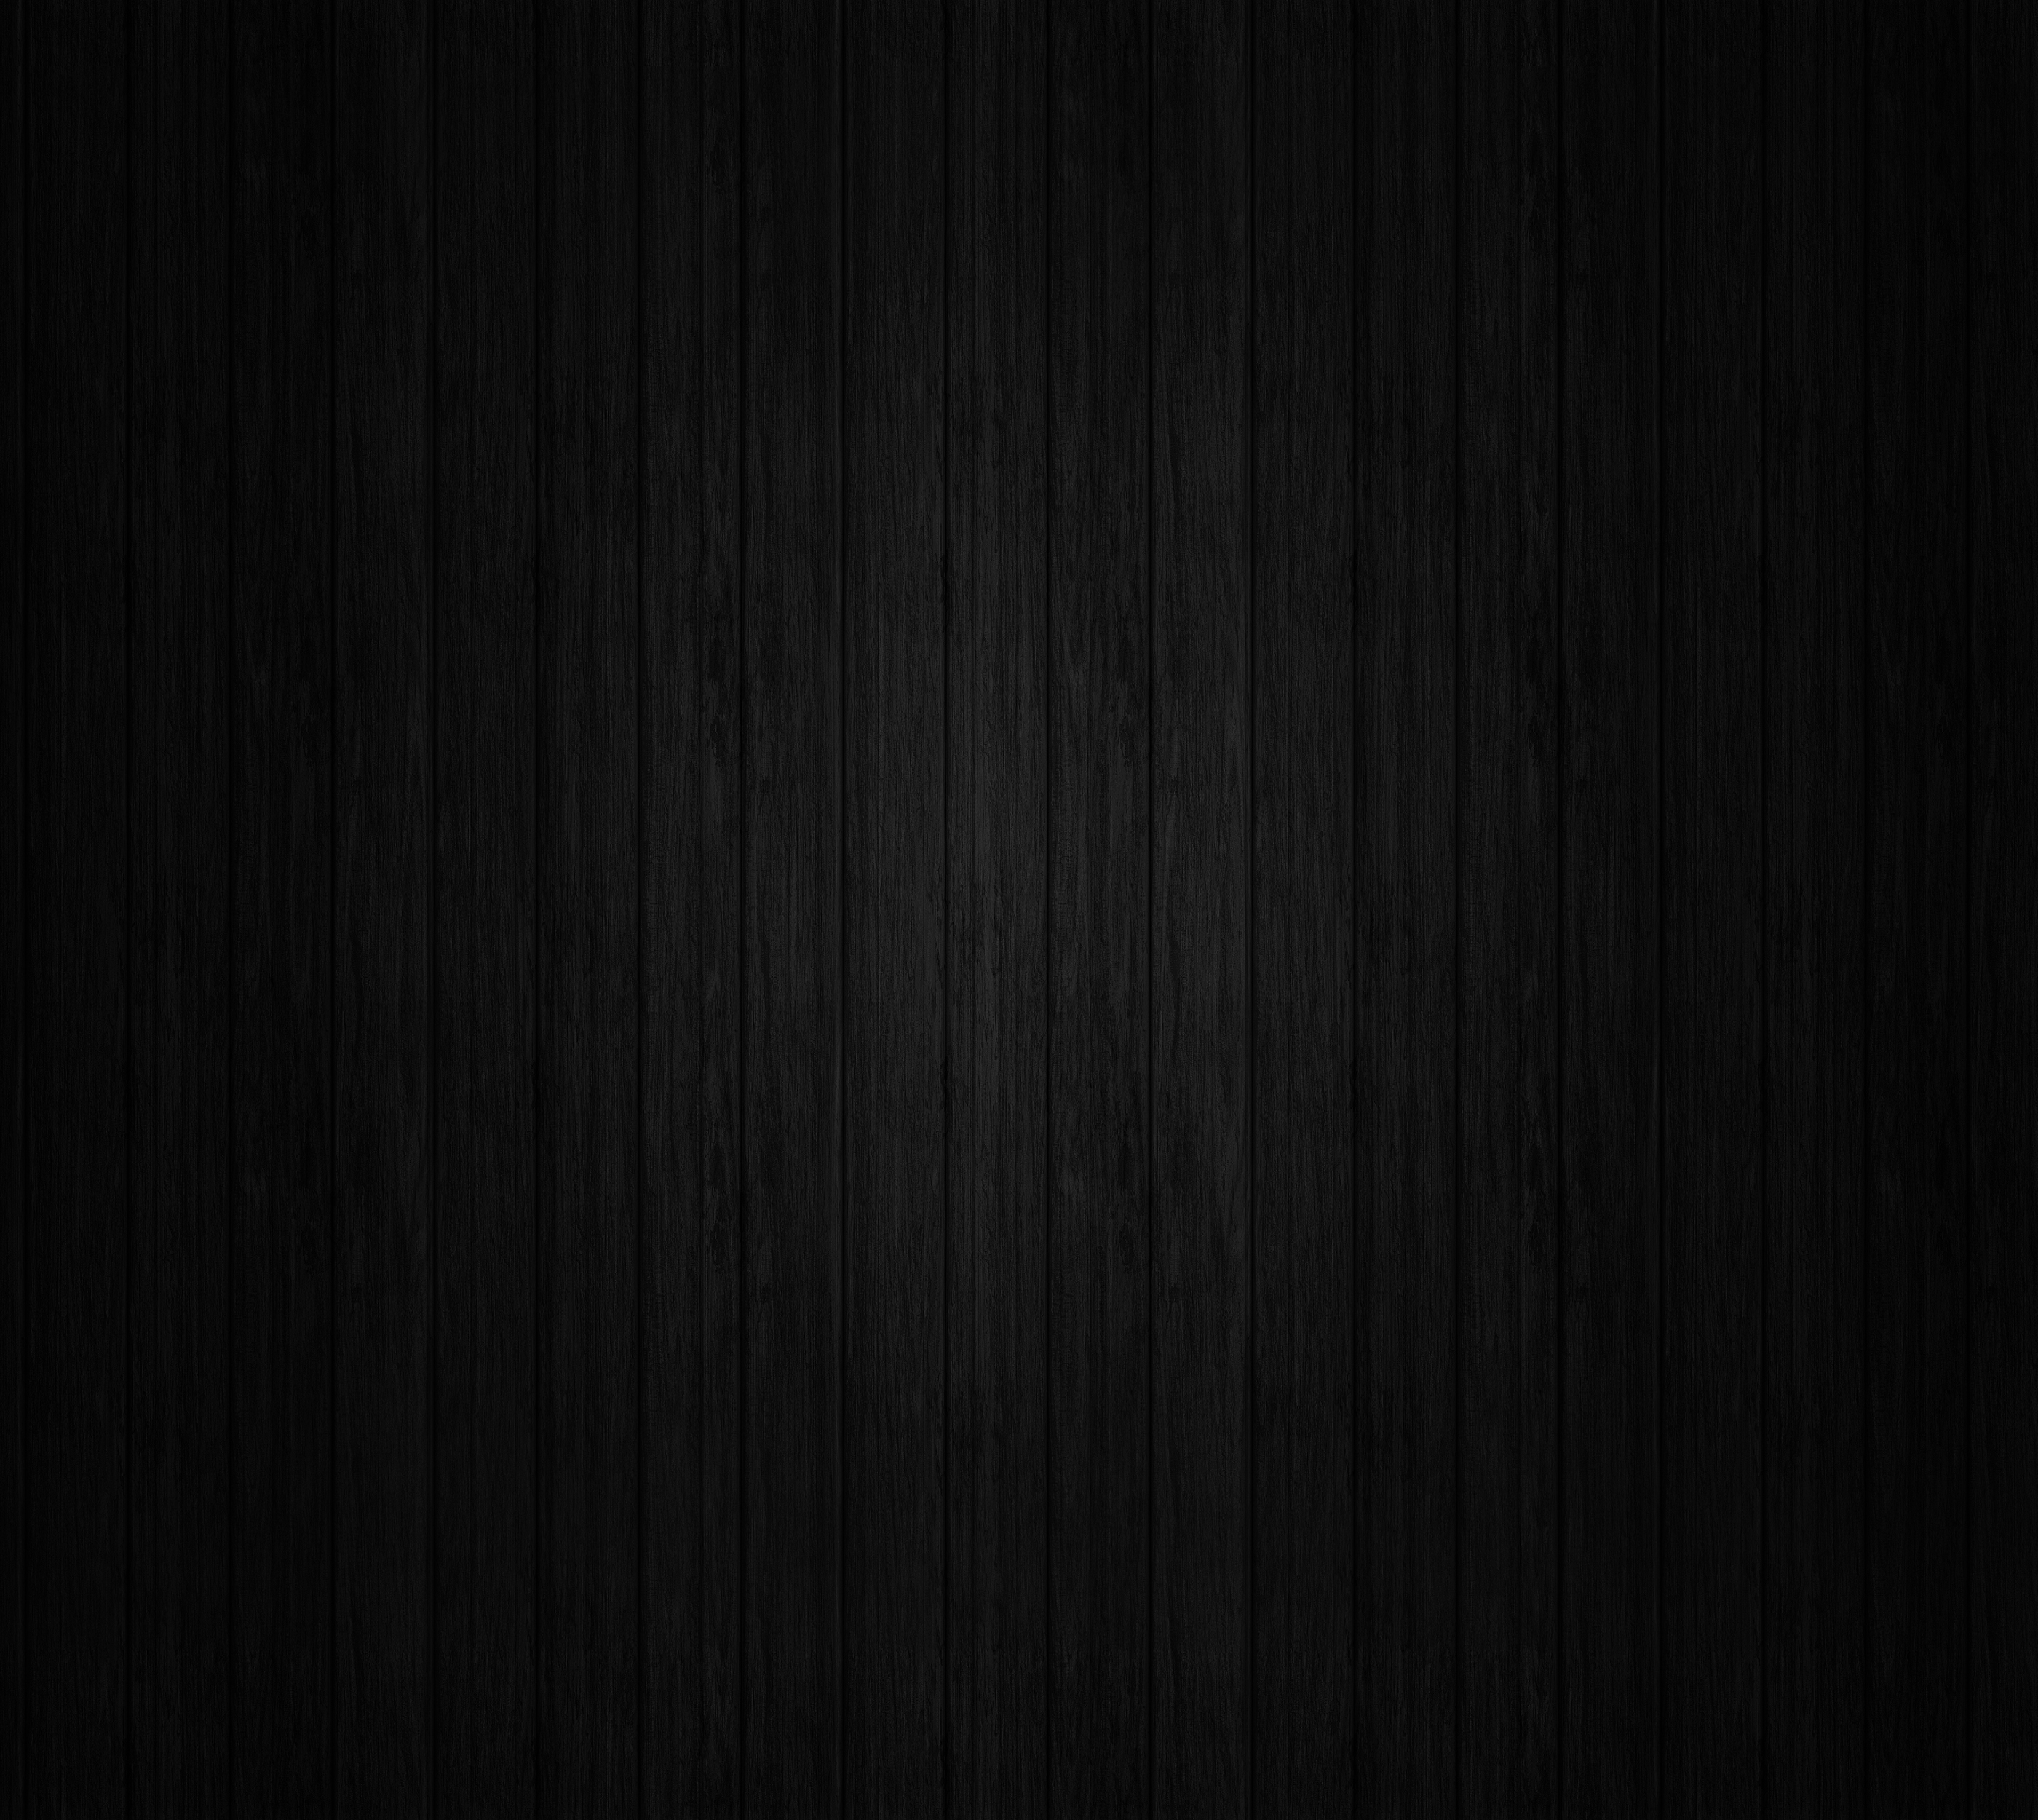 Black Wood Background Texture